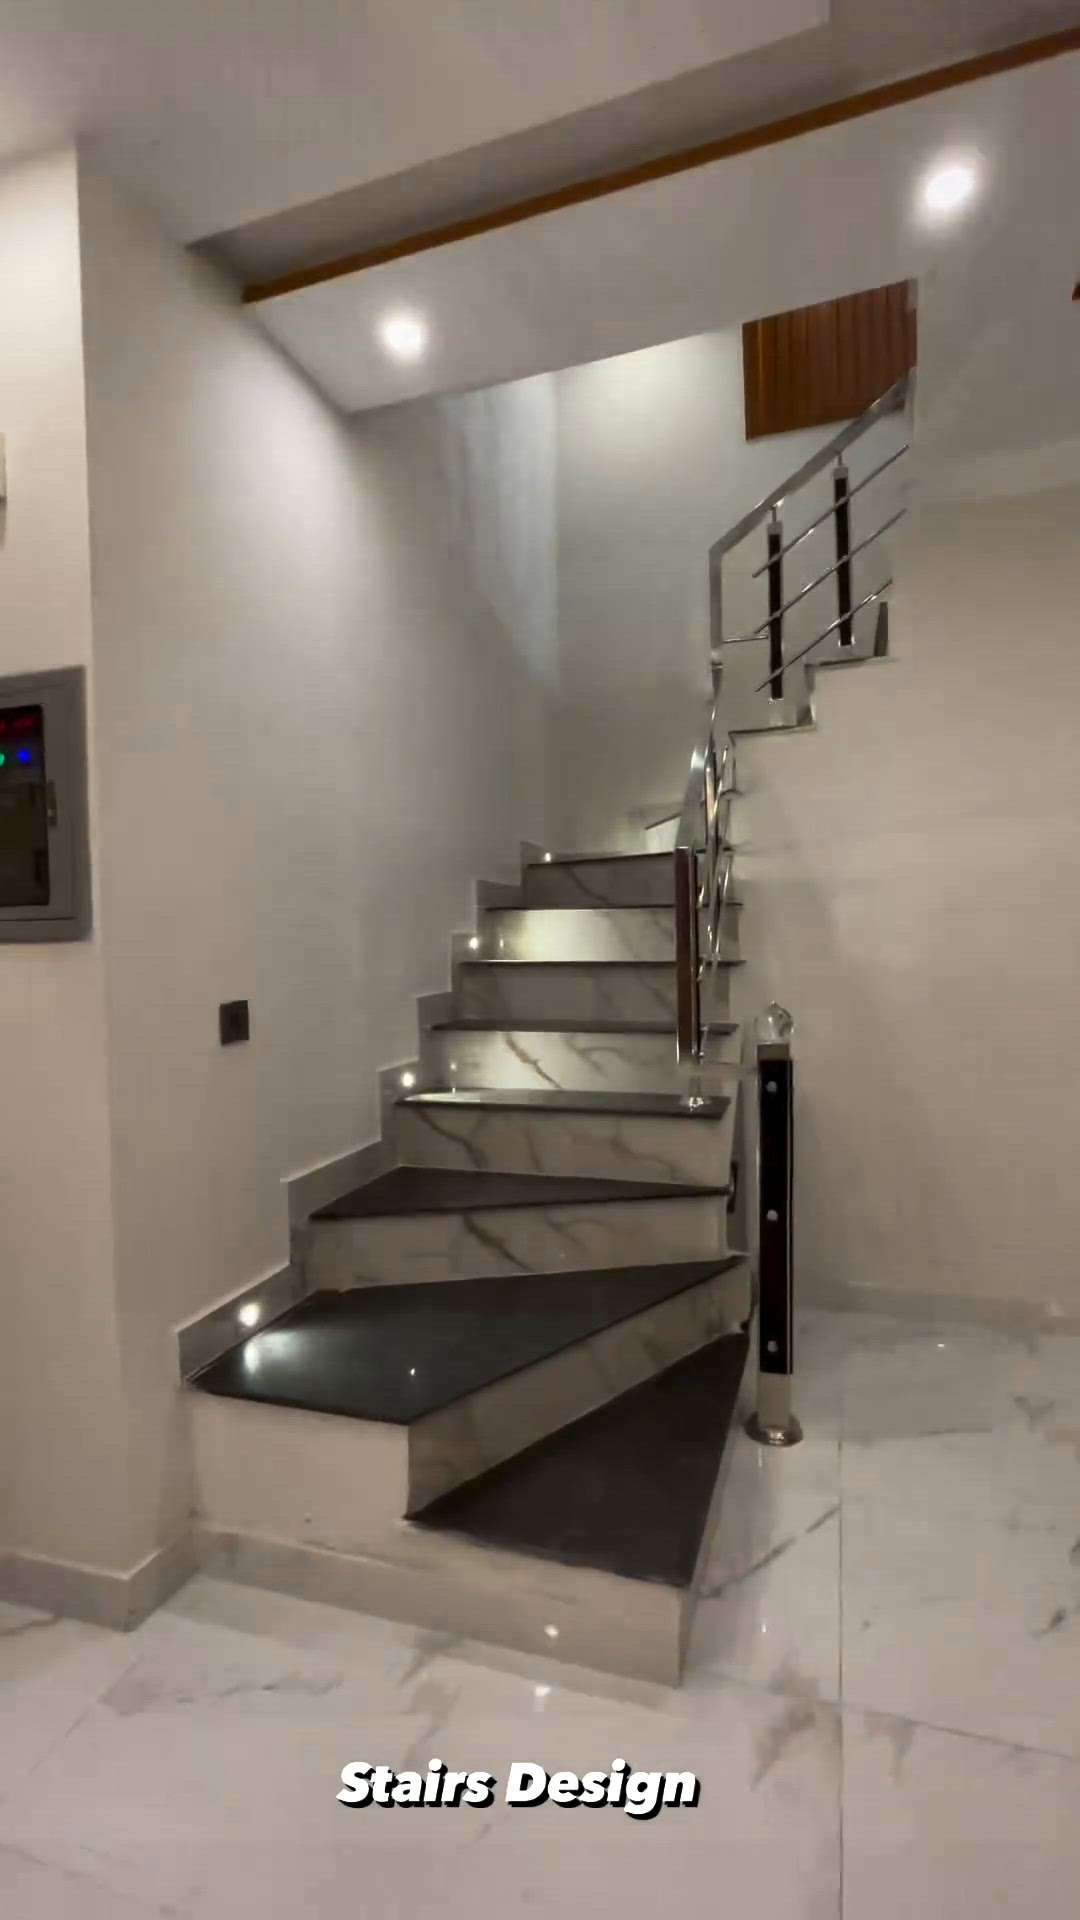 #StaircaseDecors  #GlassHandRailStaircase  #StaircaseDesigns  #StaircaseDecors  #InteriorDesigner  #homeinterior  #HomeDecor